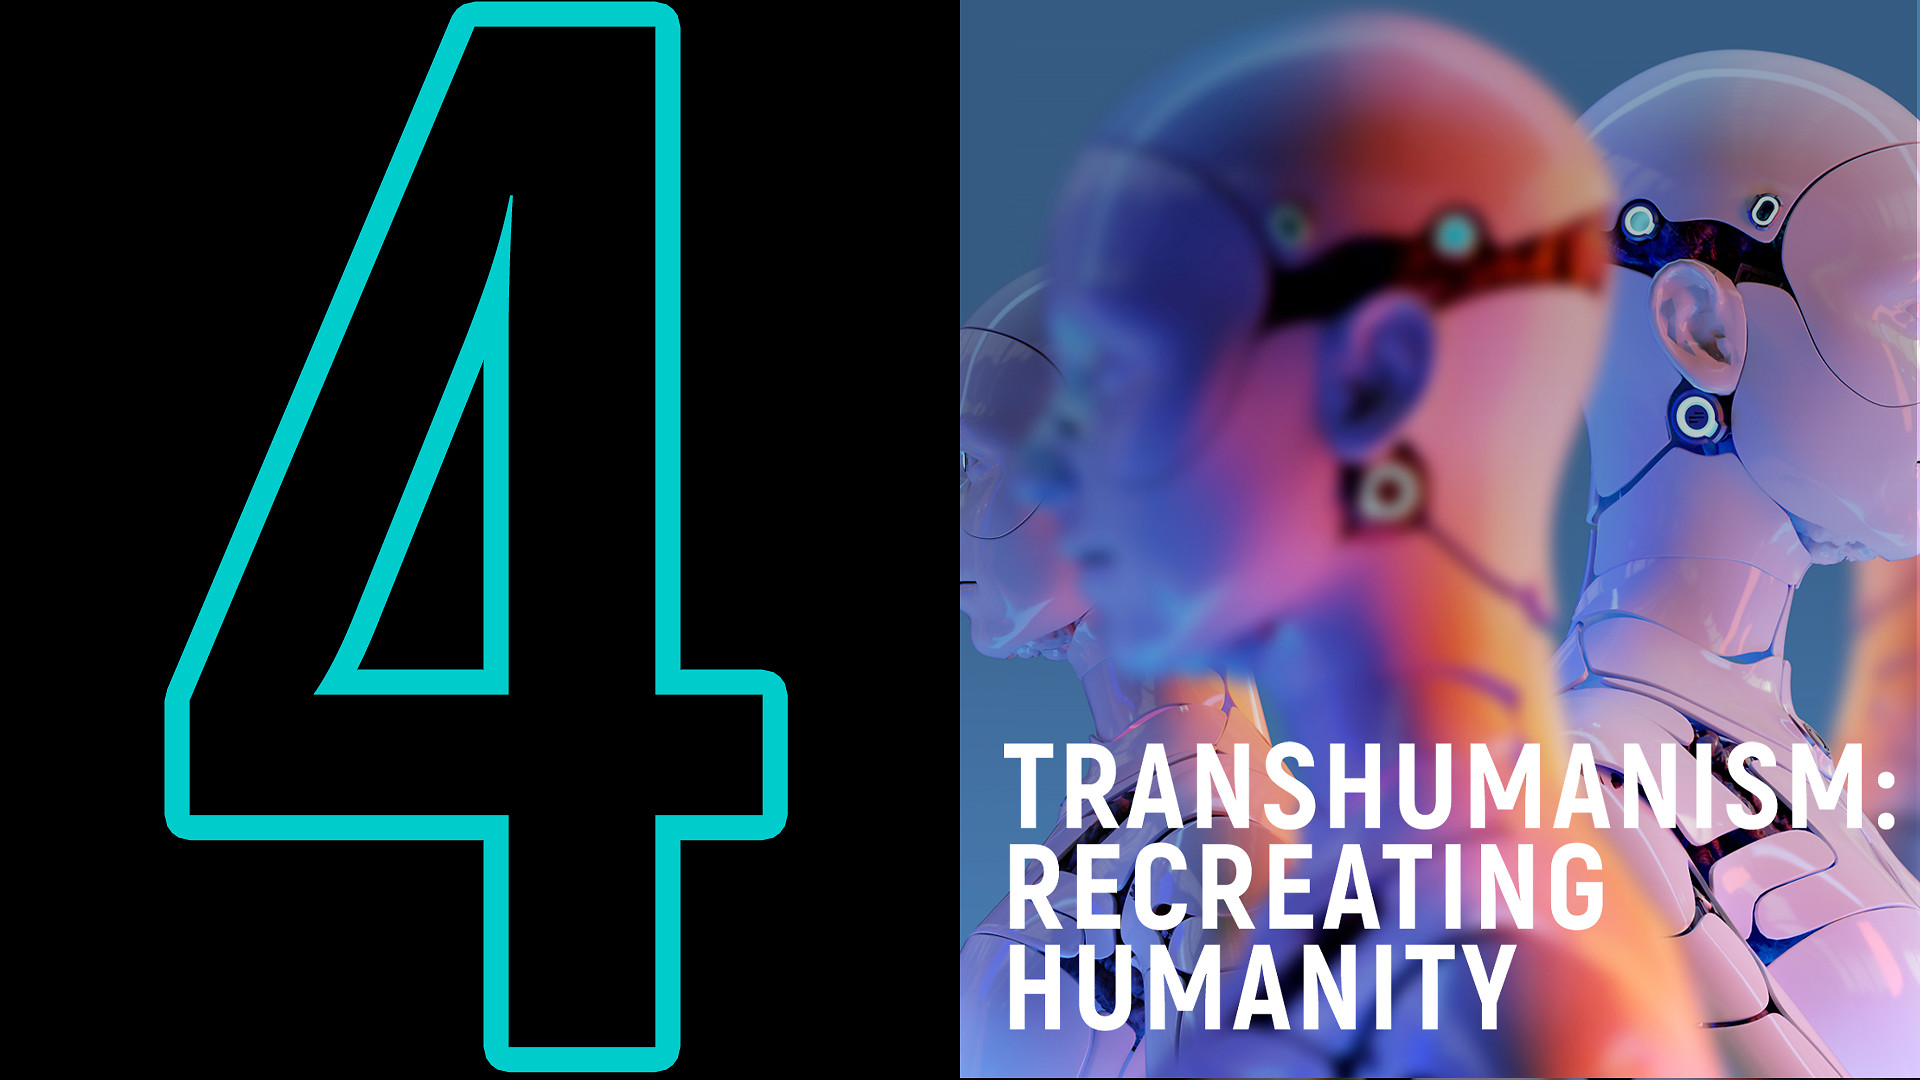 Transhumanism: Recreating Humanity